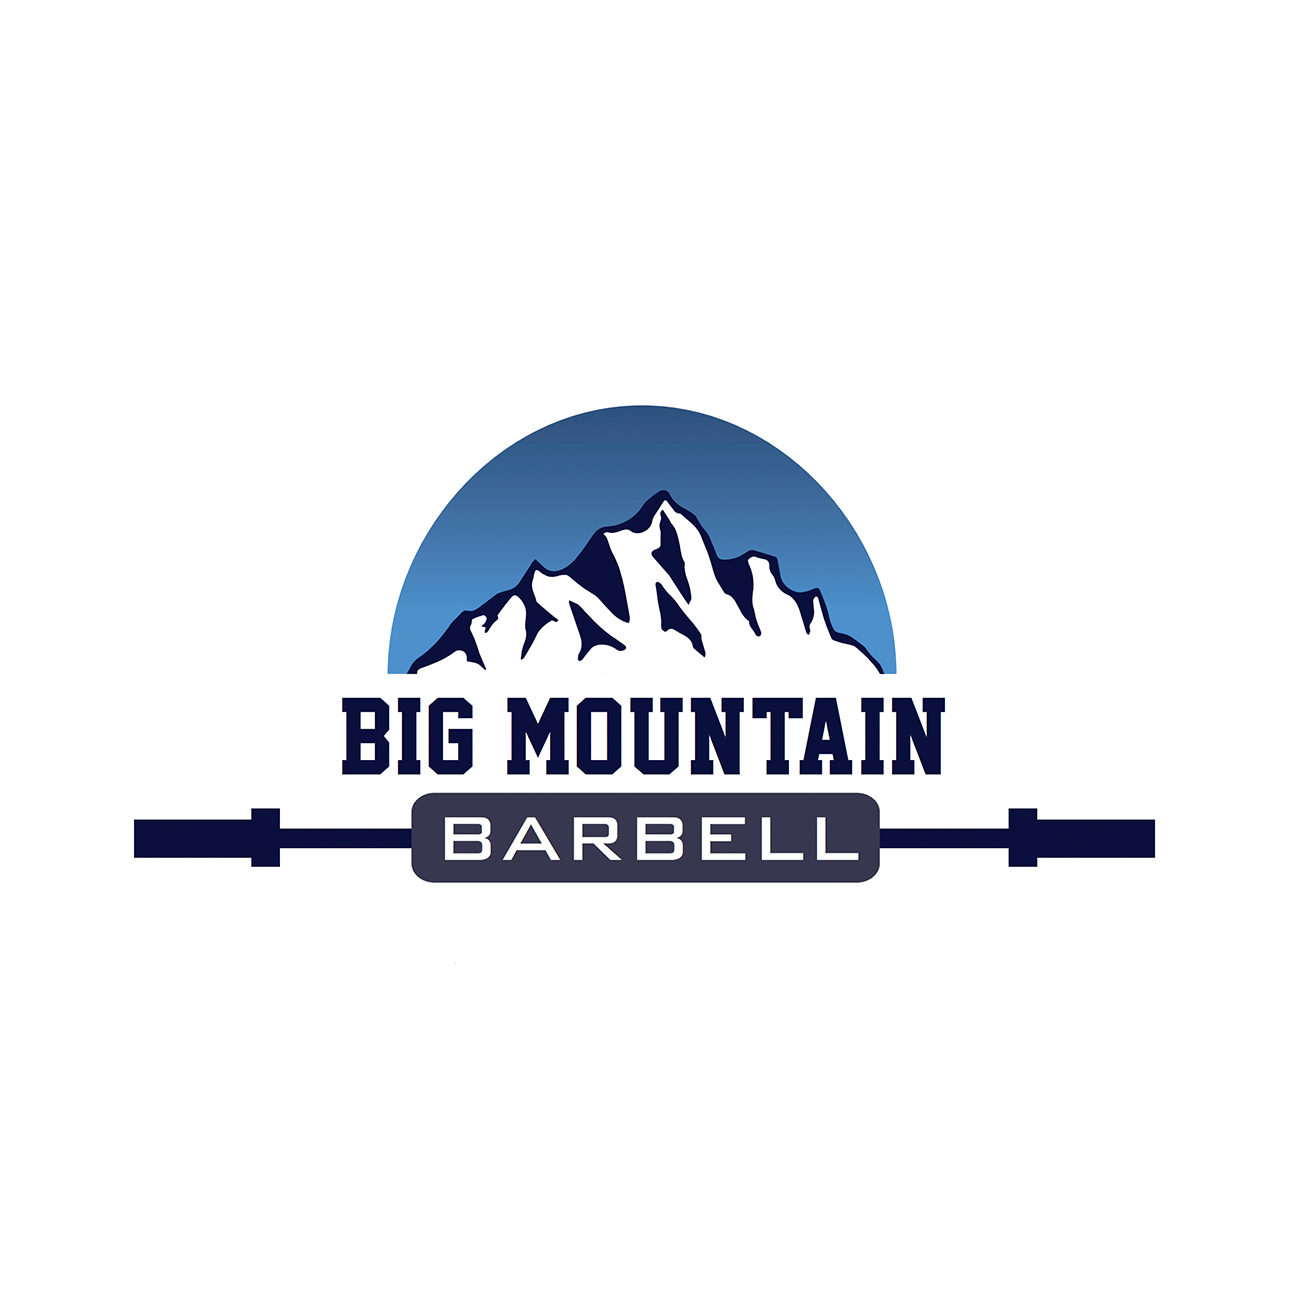 Big Mountain Barbell Logo - Designed by James Hooper